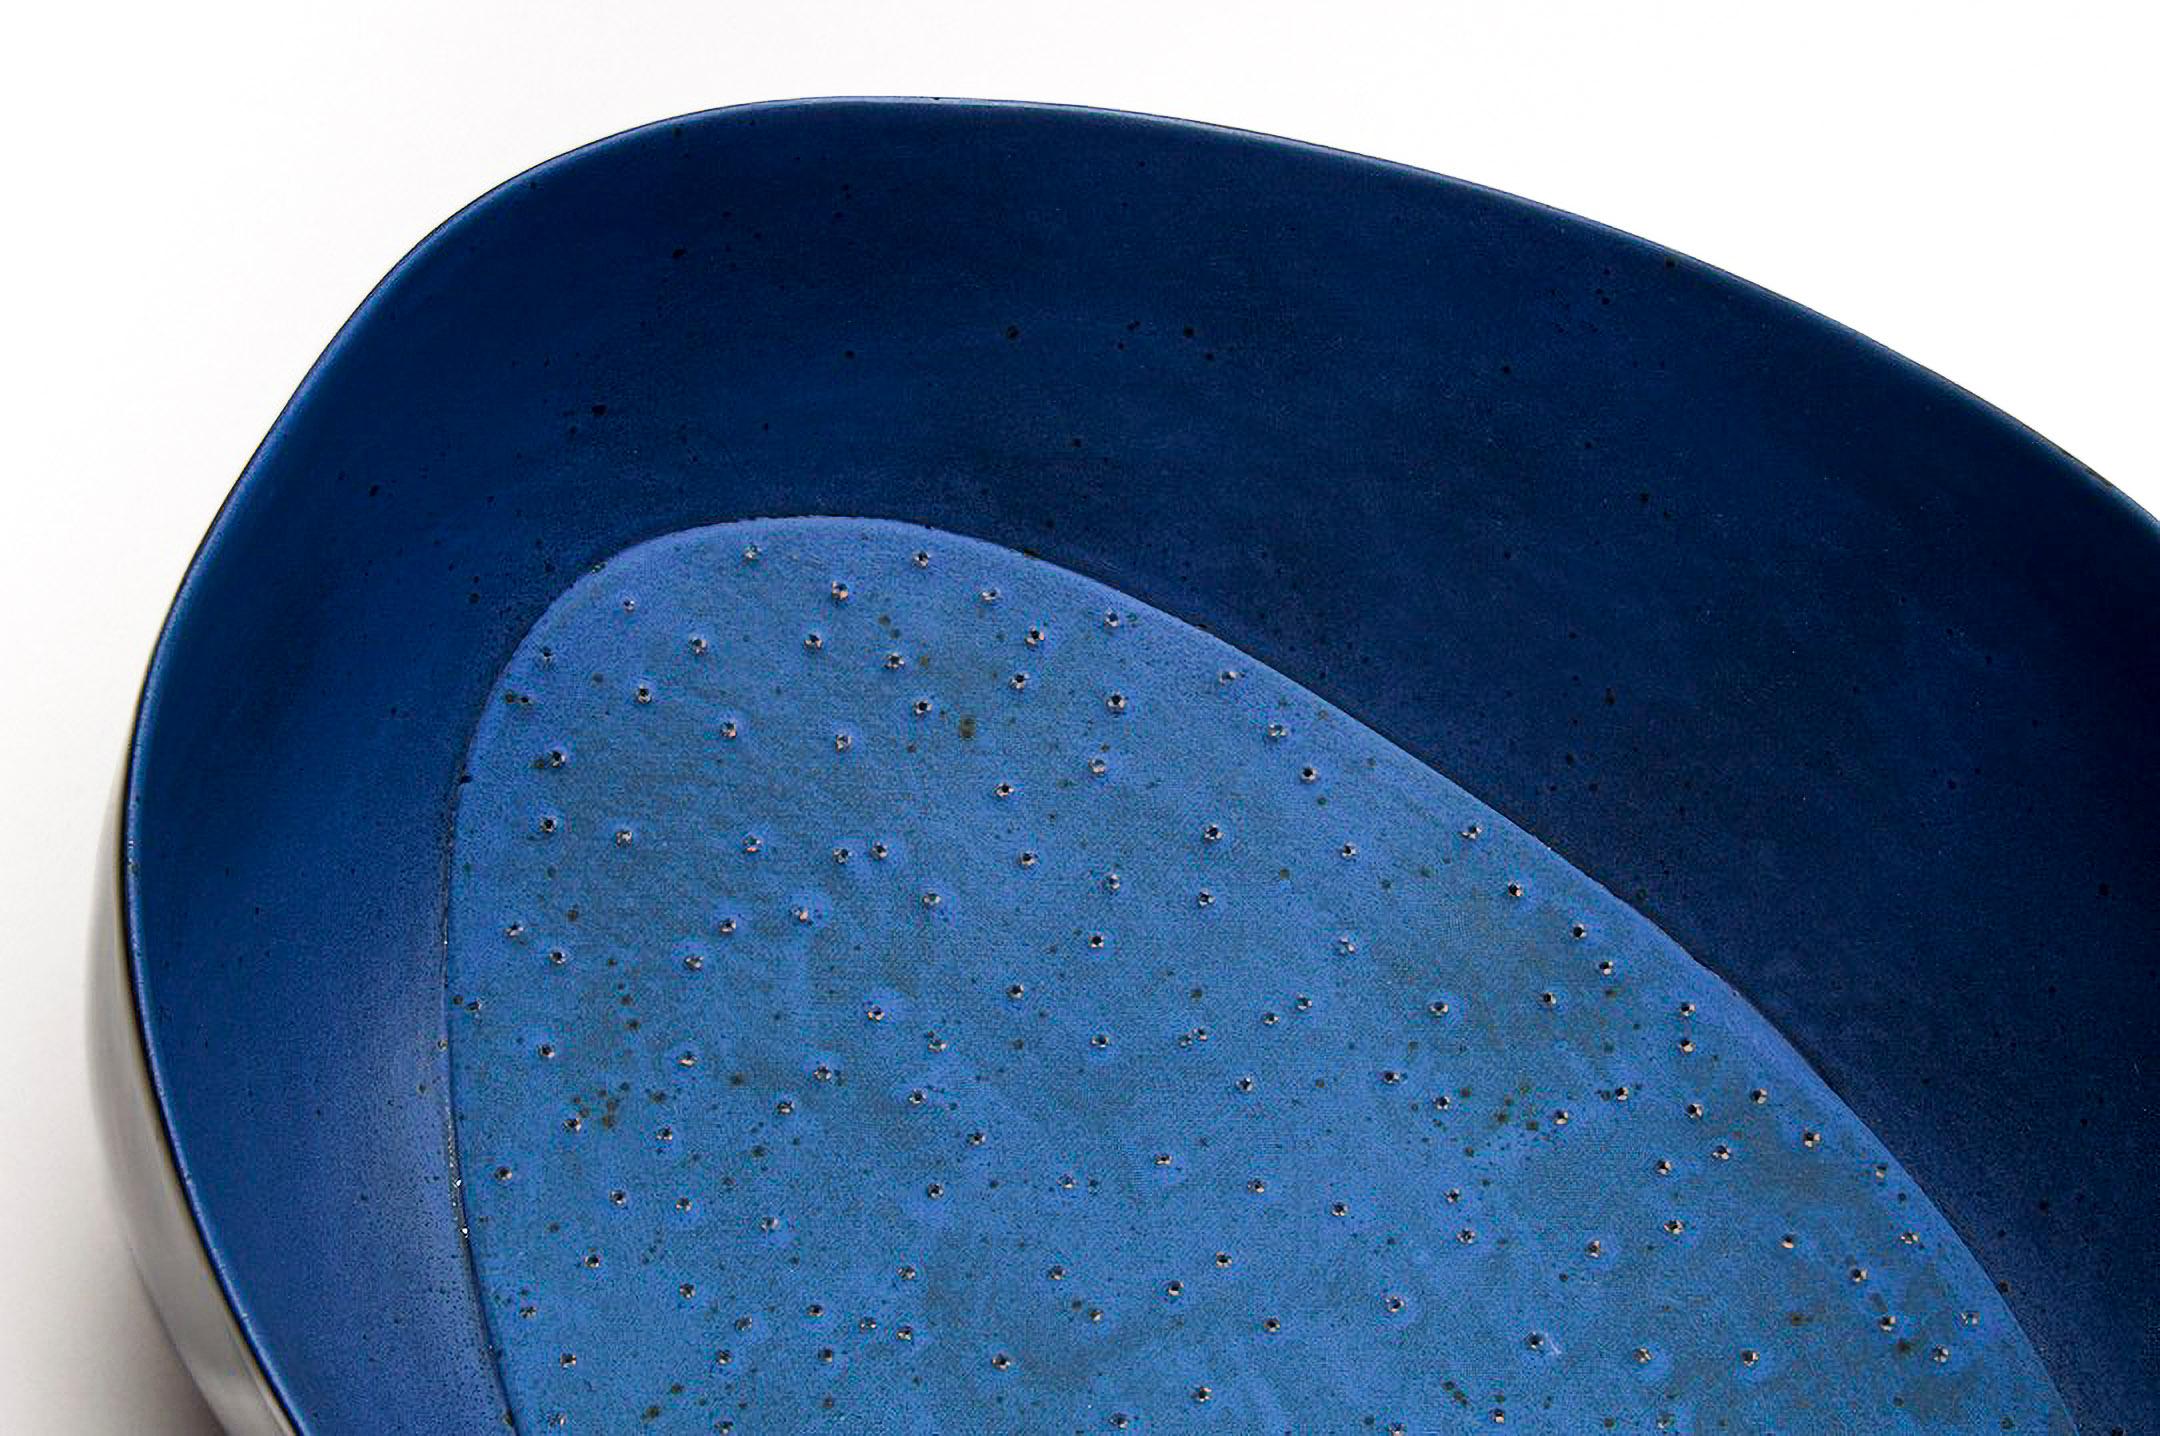 Afterlife No 3  - blue, black, nature inspired, elongated, ceramic vessel - Contemporary Sculpture by Steven Heinemann